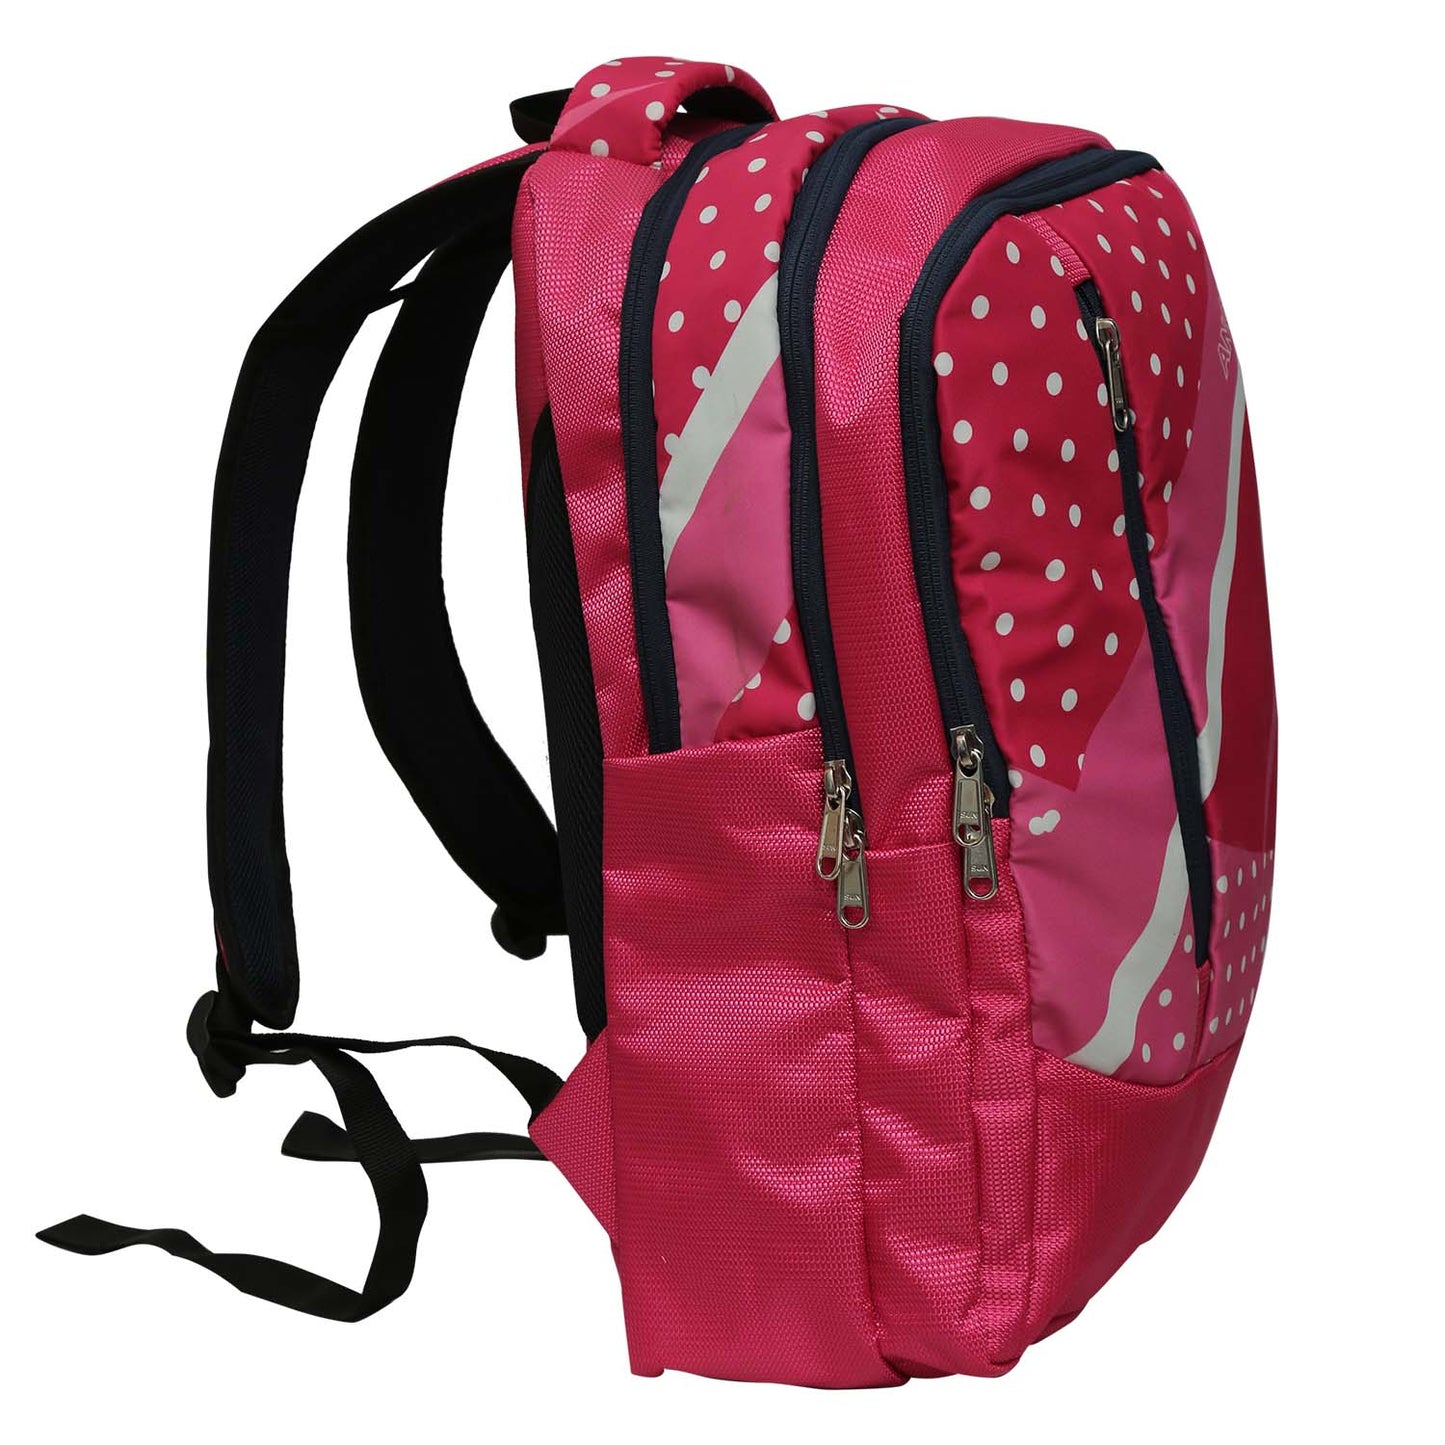 Fenta Sports Unisex Backpack (Pink)